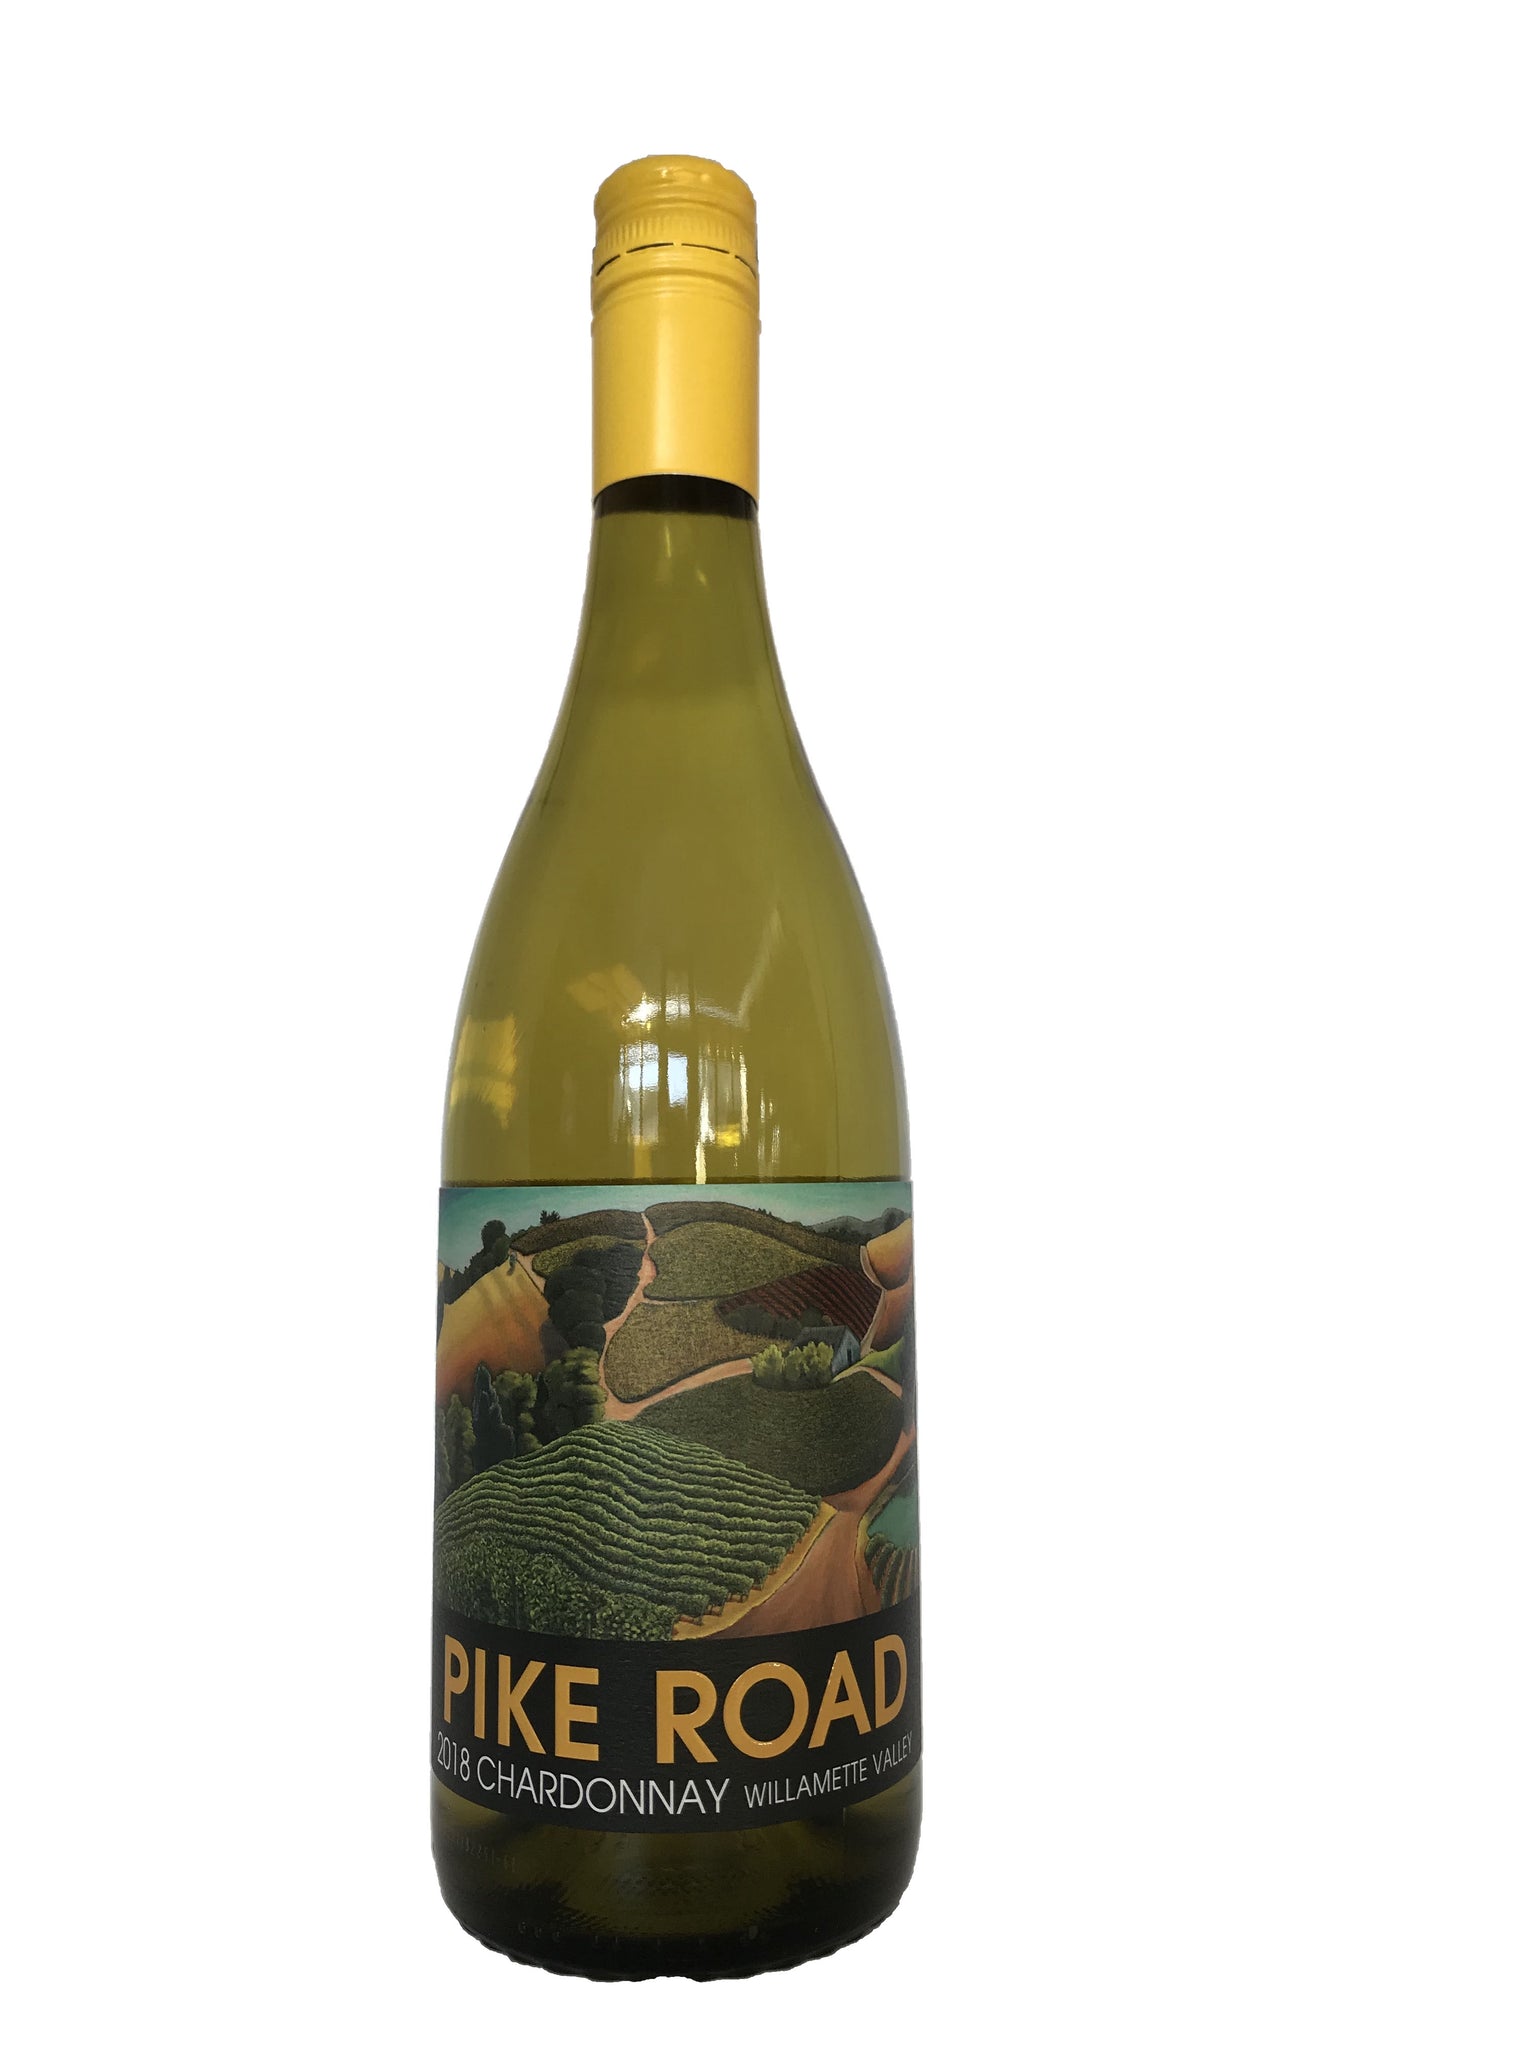 Pike Road Chardonnay Willamette Valley 2019